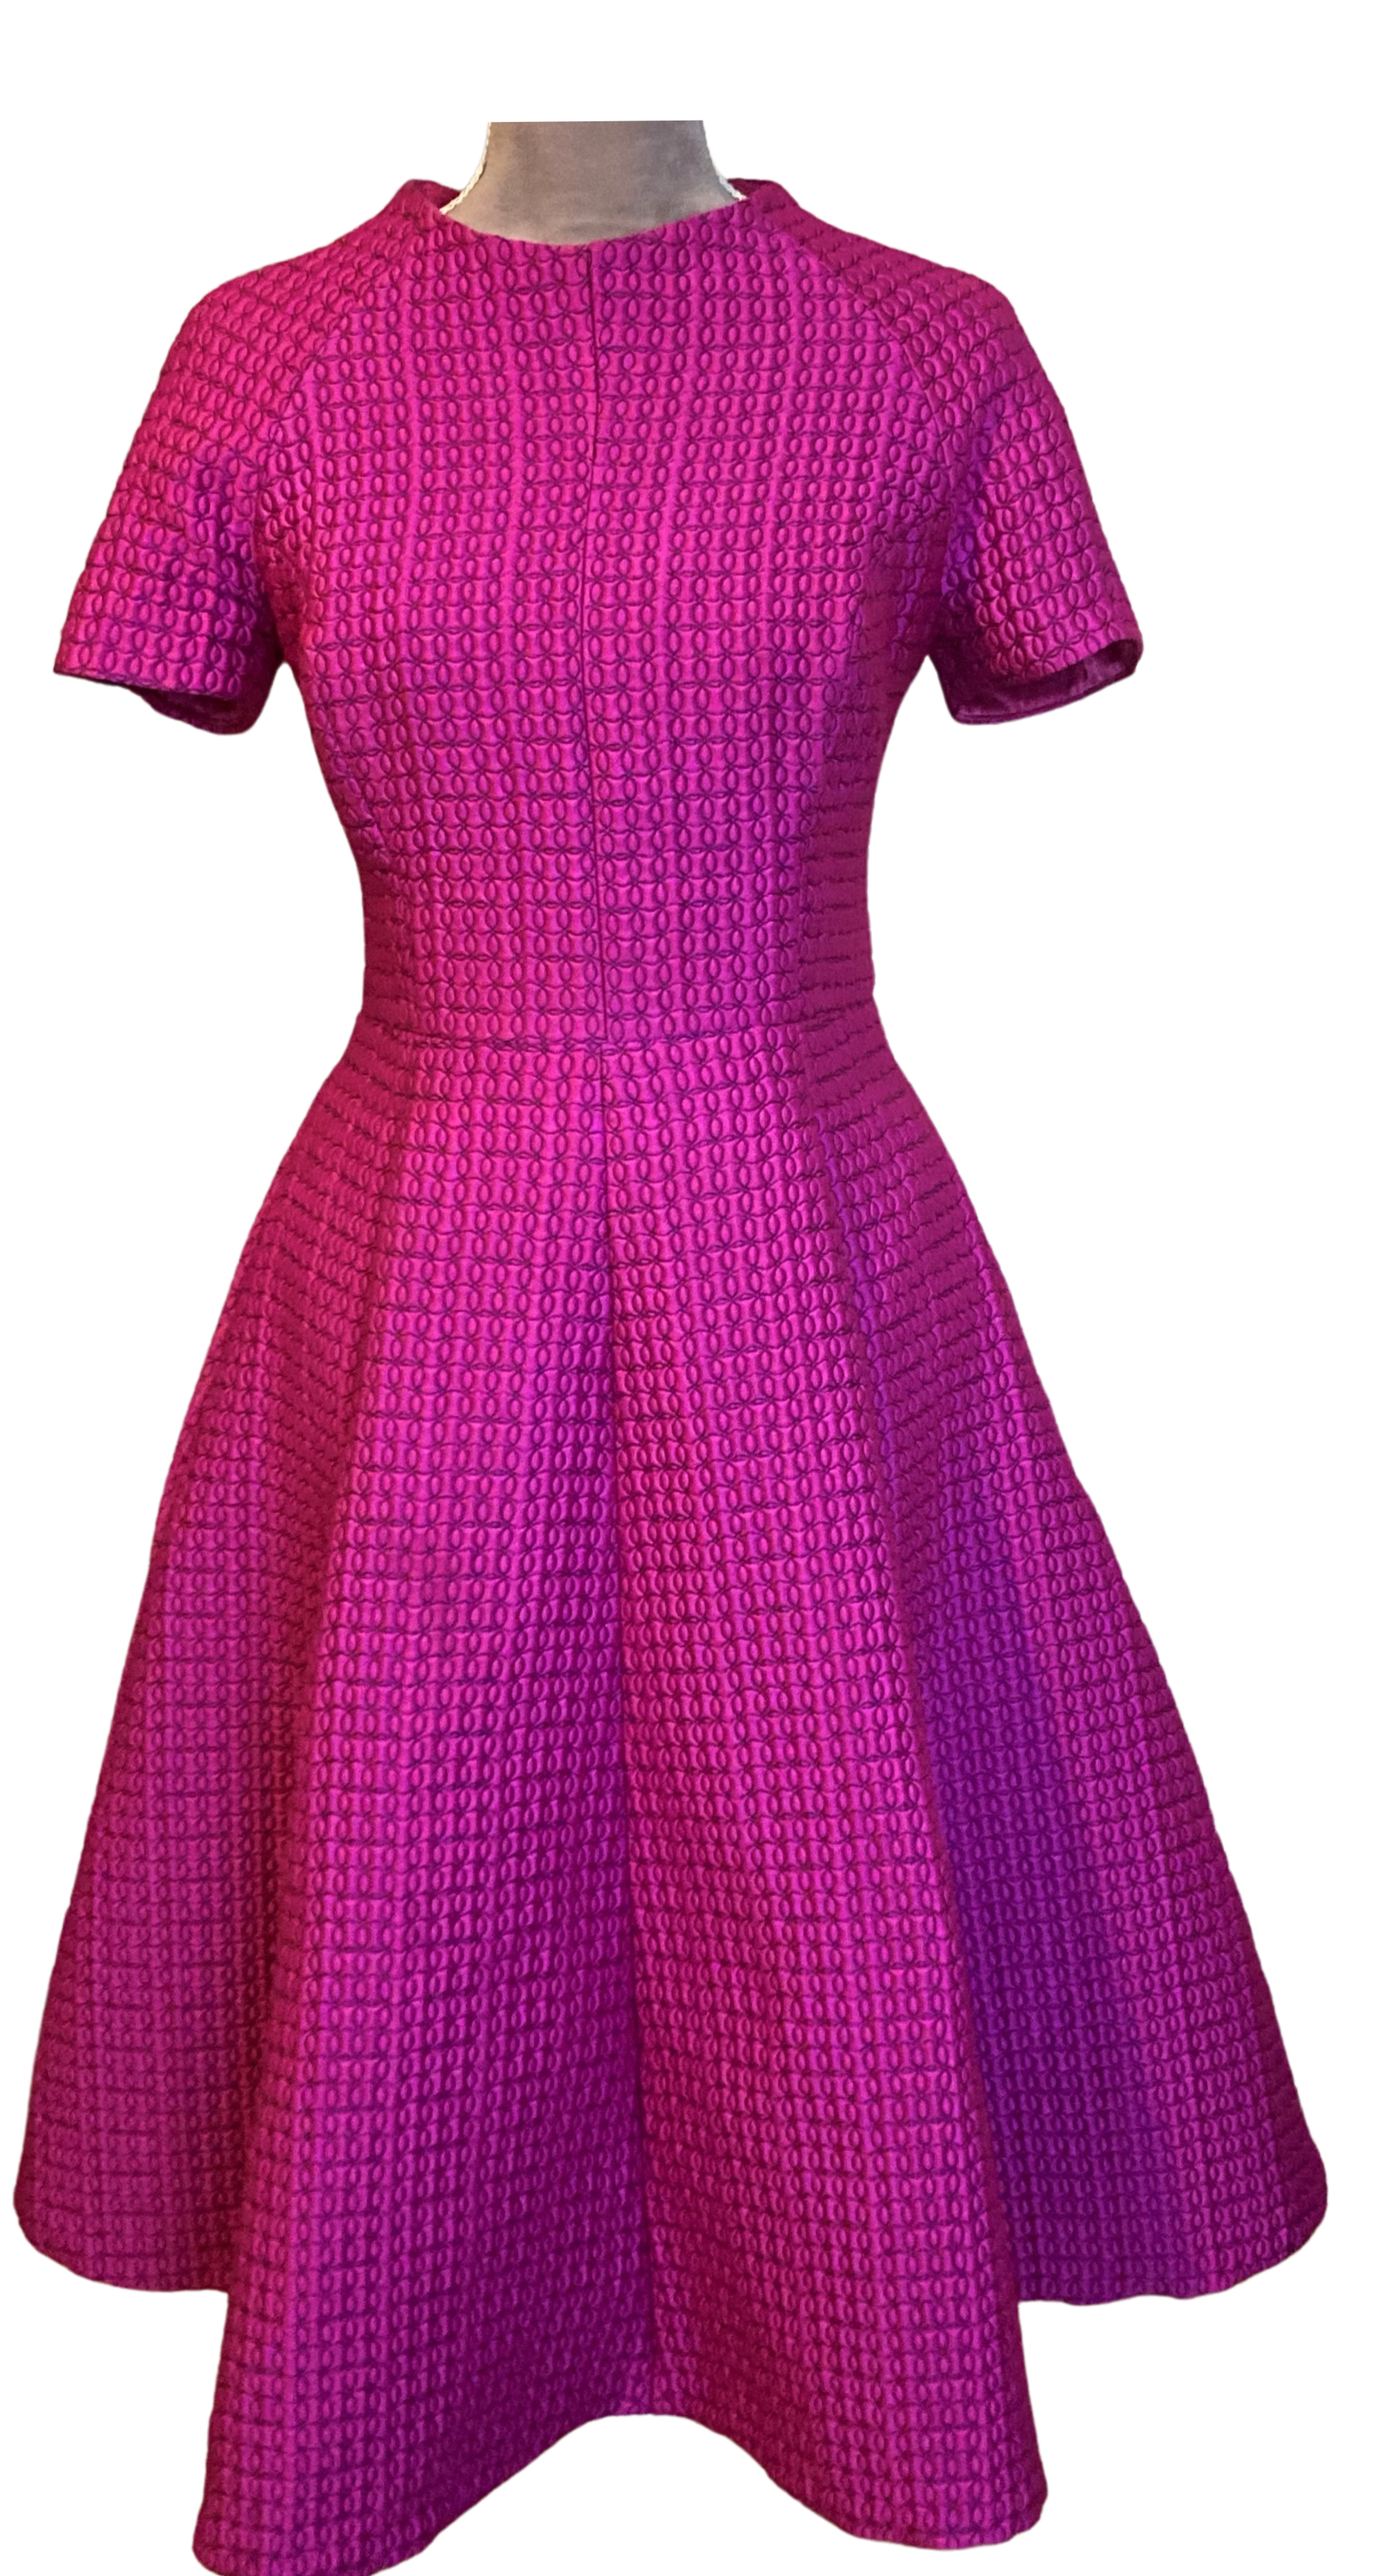 Stylish Womens Denim Denim Shirt Dress With Turn Collar, Rivet Detailing,  And Long Sleeves X0521 From Musuo01, $17.52 | DHgate.Com